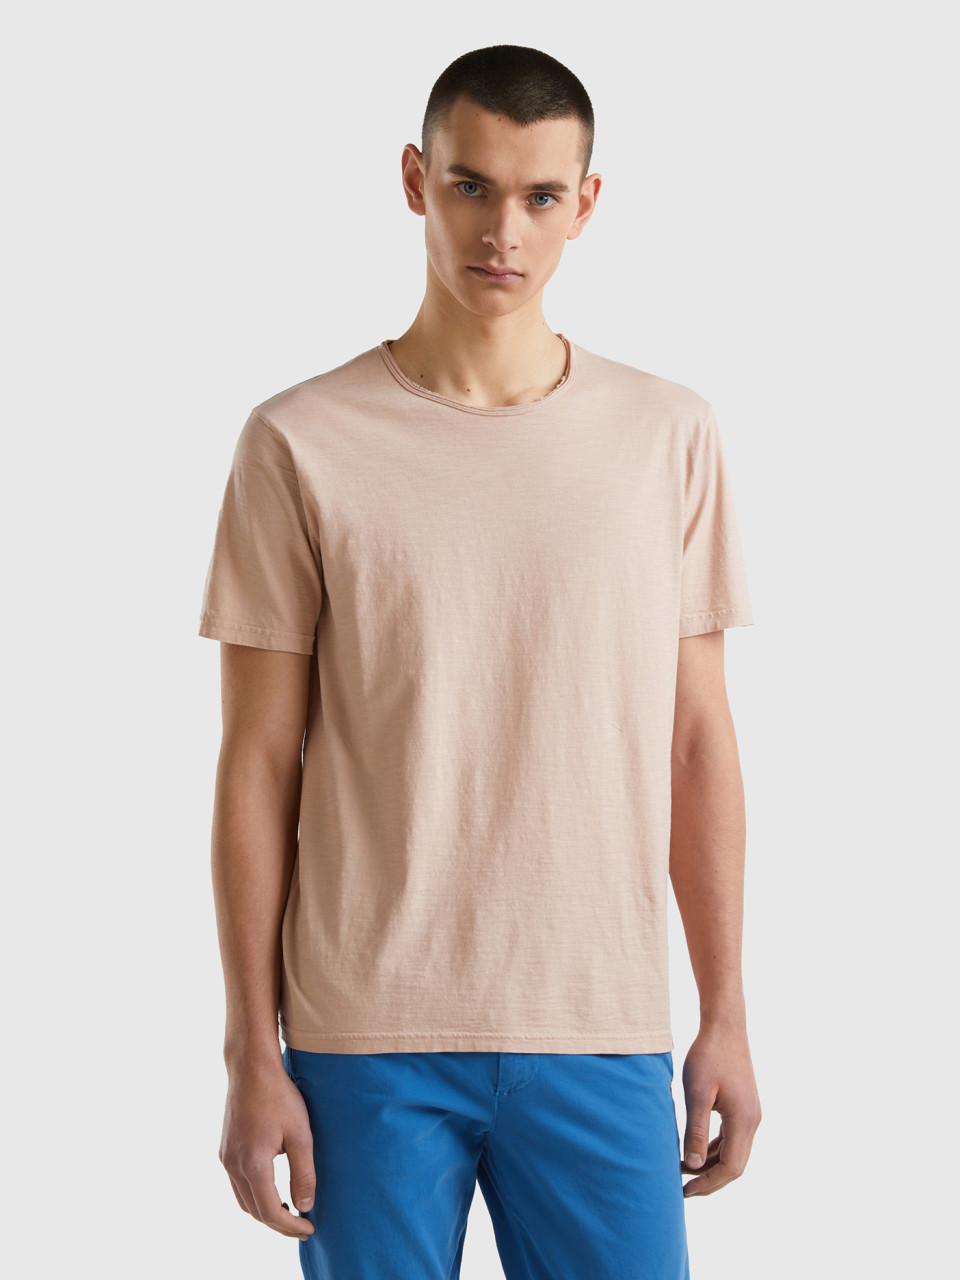 Benetton, Pink Slub Cotton T-shirt, Nude, Men